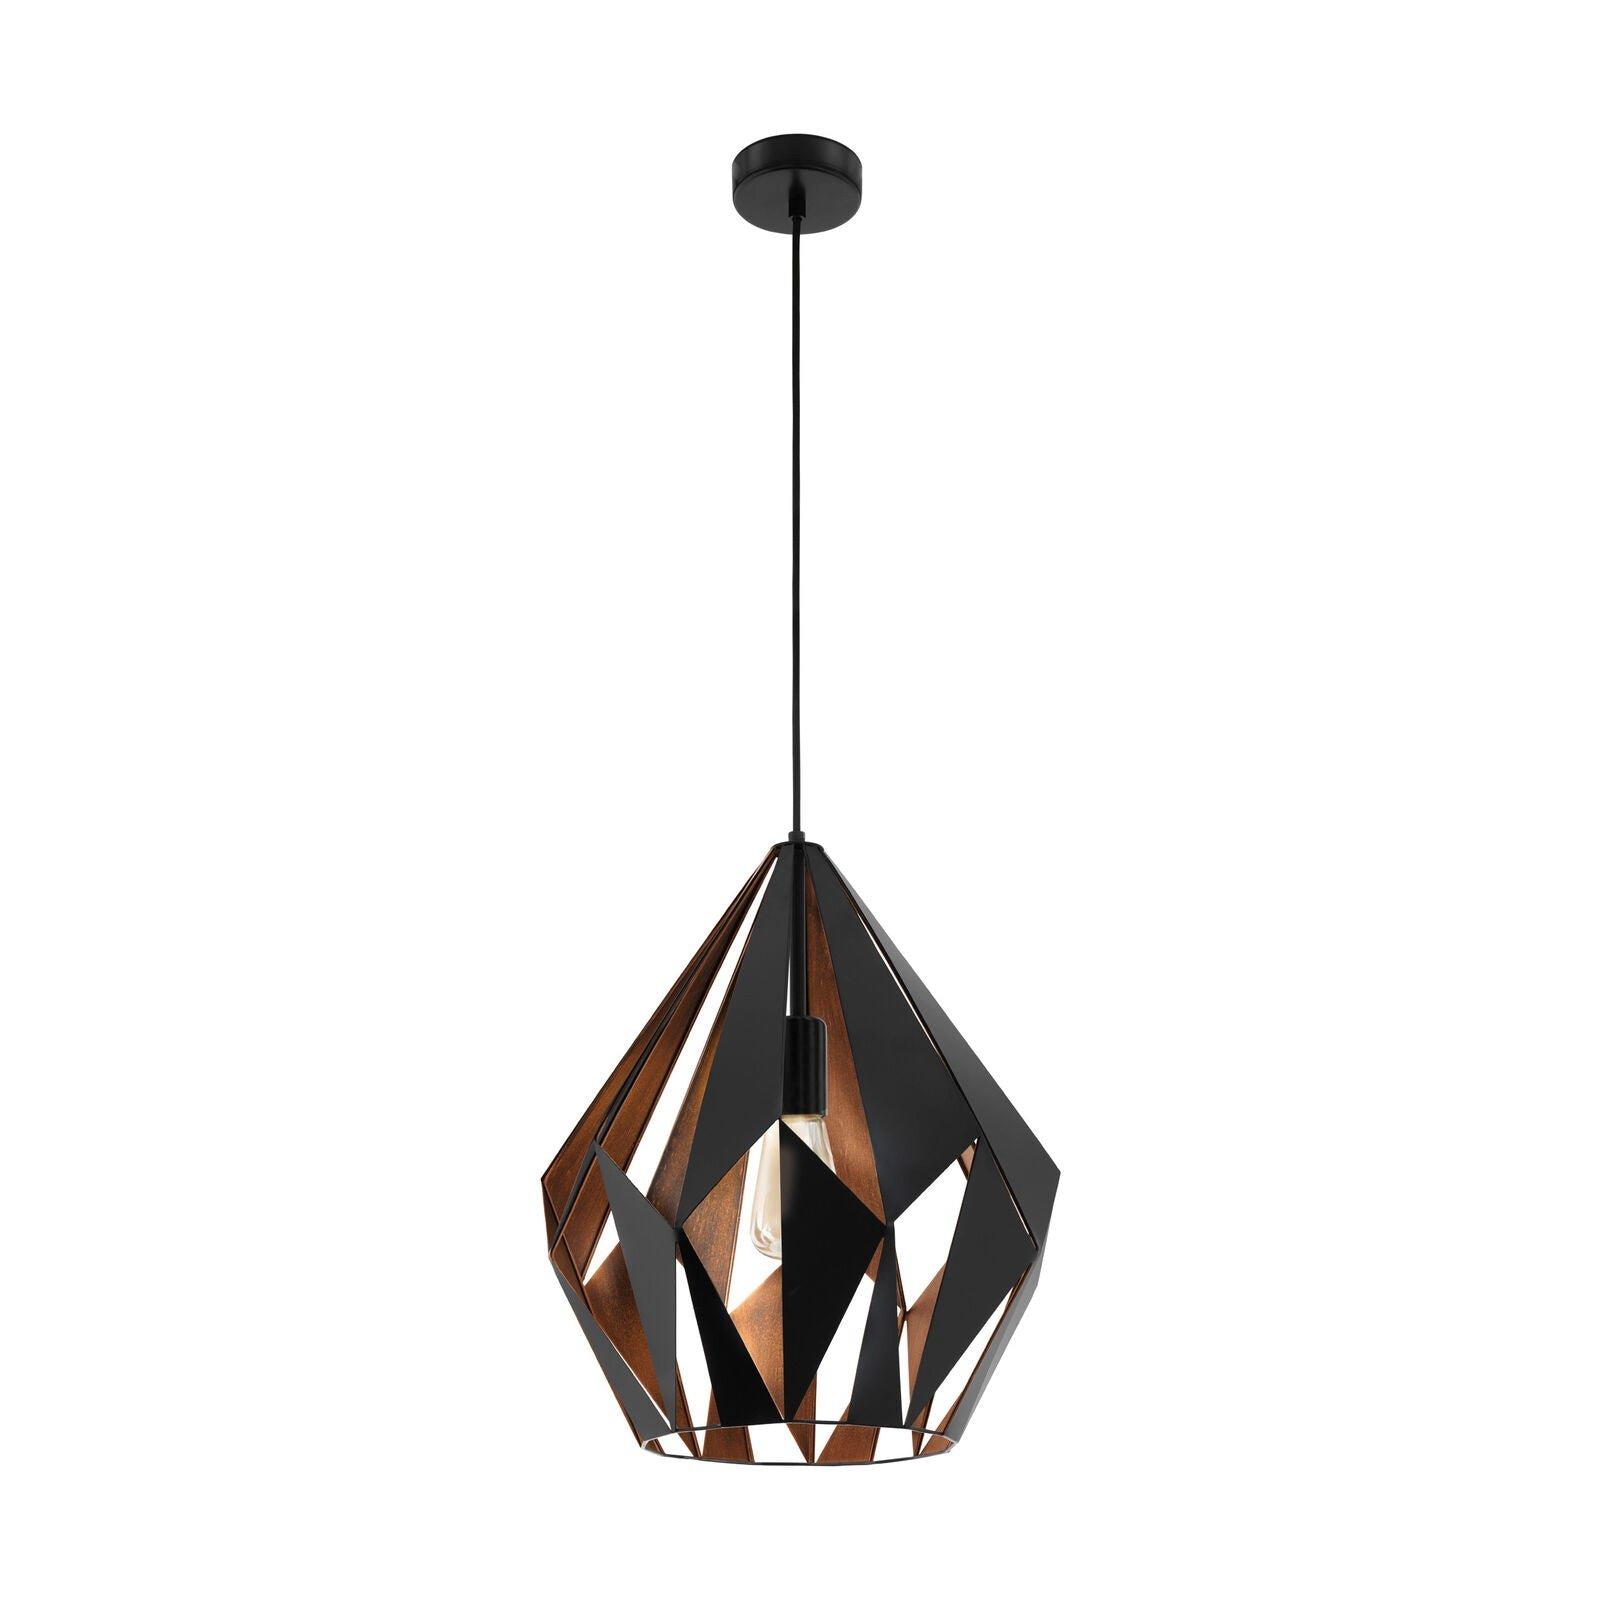 Hanging Ceiling Pendant Light Black & Copper Geometric 60W E27 Modern Feature